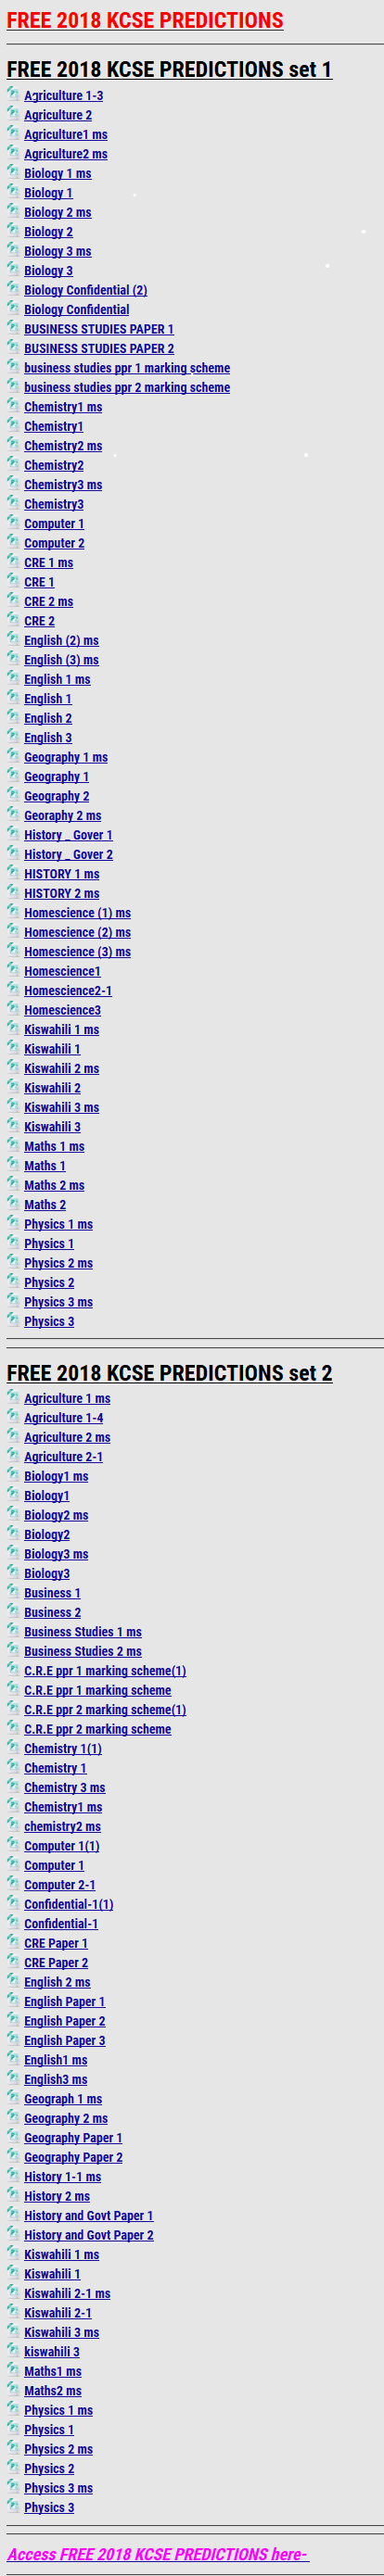 FREE 2018 KCSE PREDICTIONS - KCSE REVISION